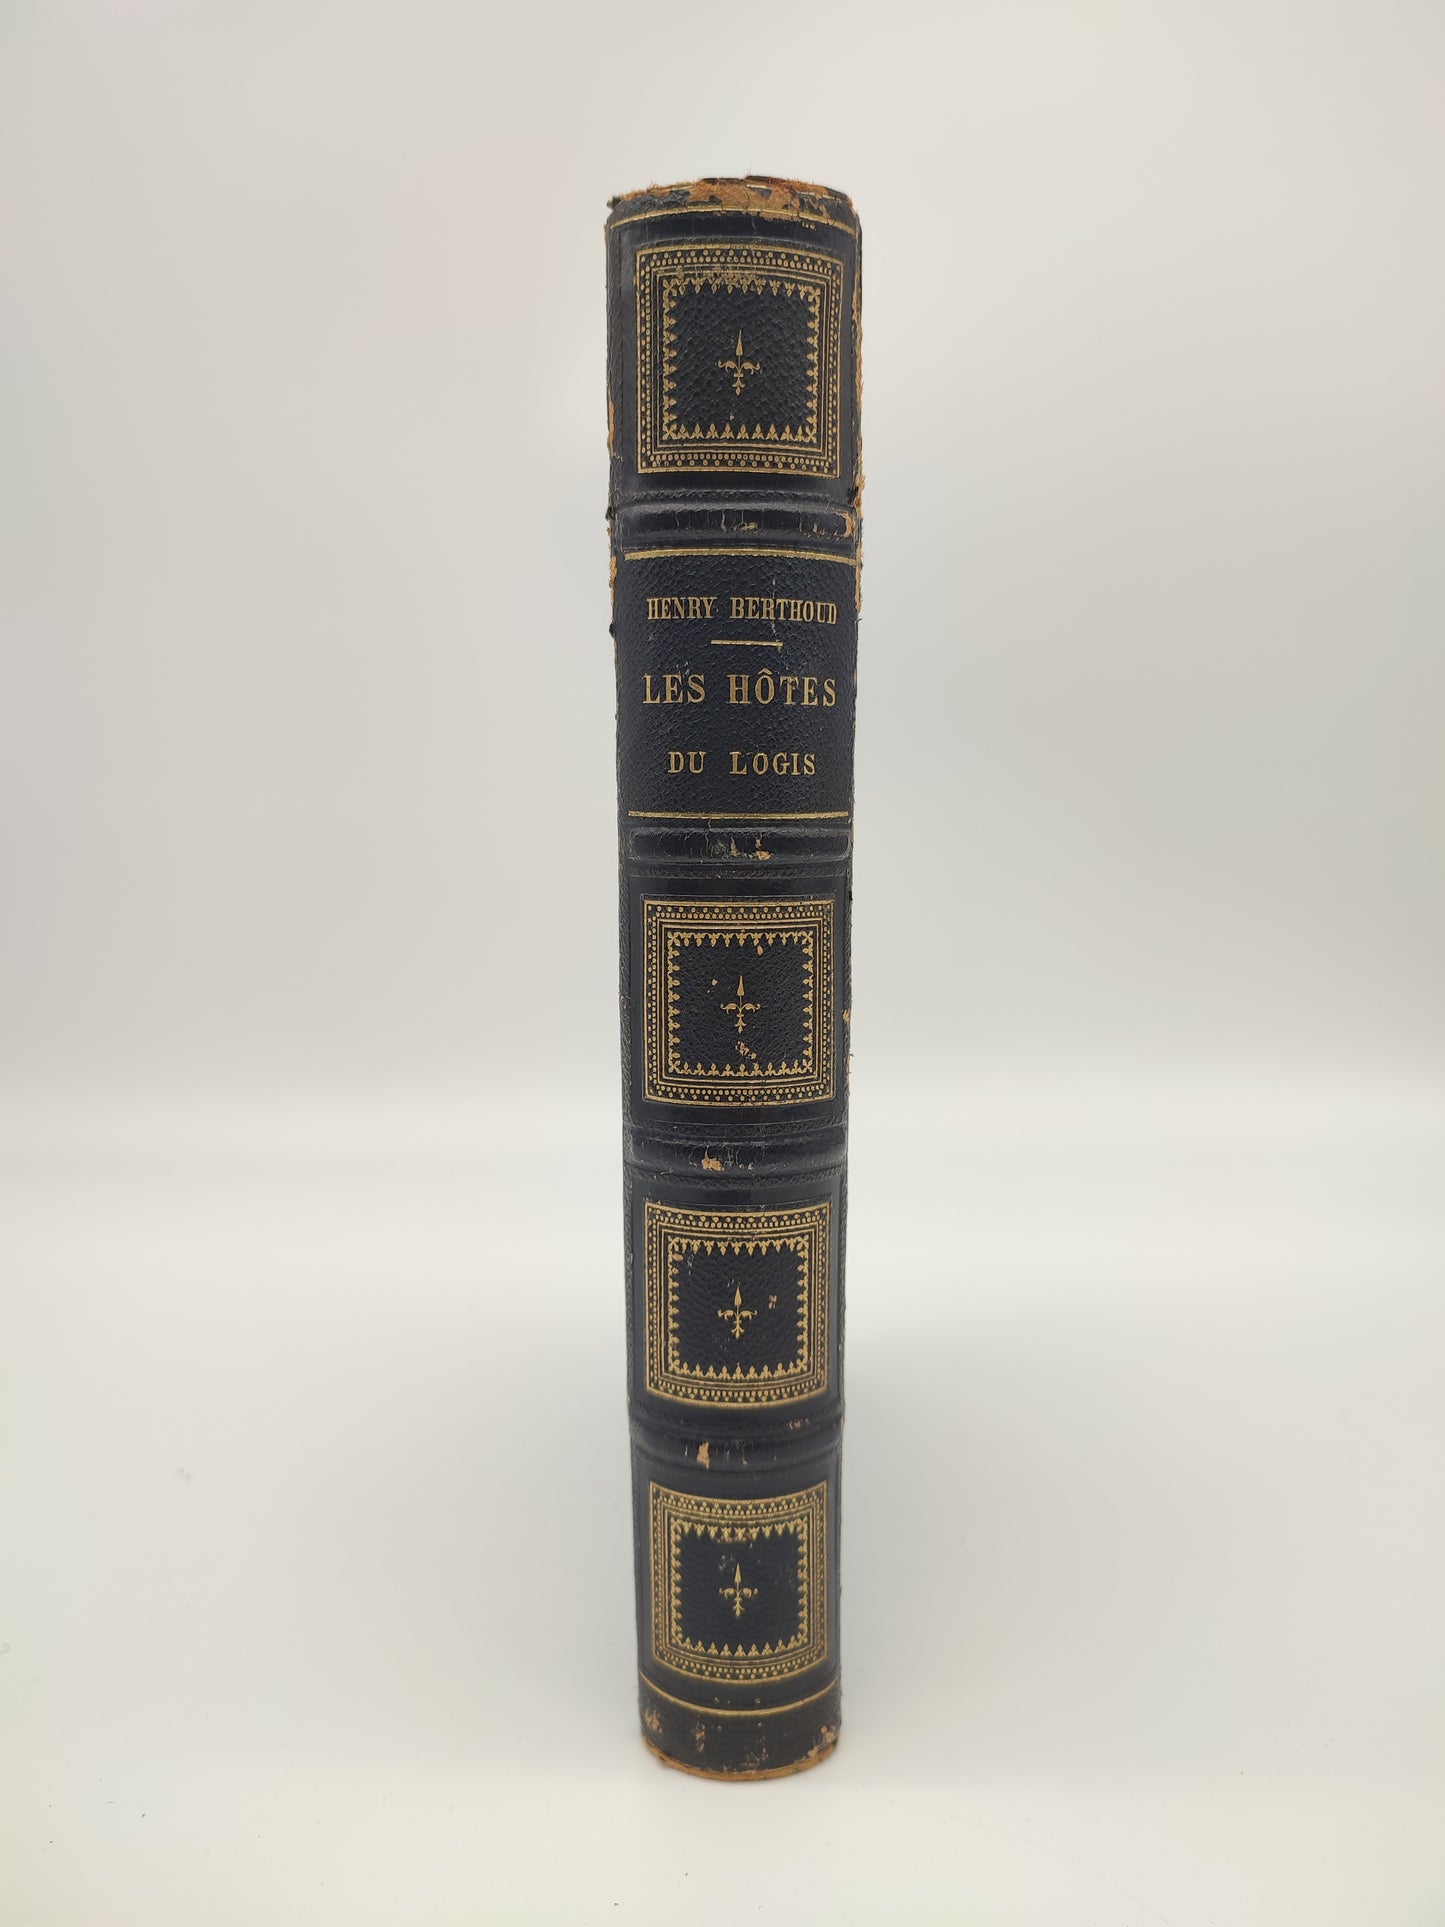 Libro di S. Henry Berthoud, Les Hotes du logis, Paris 1867